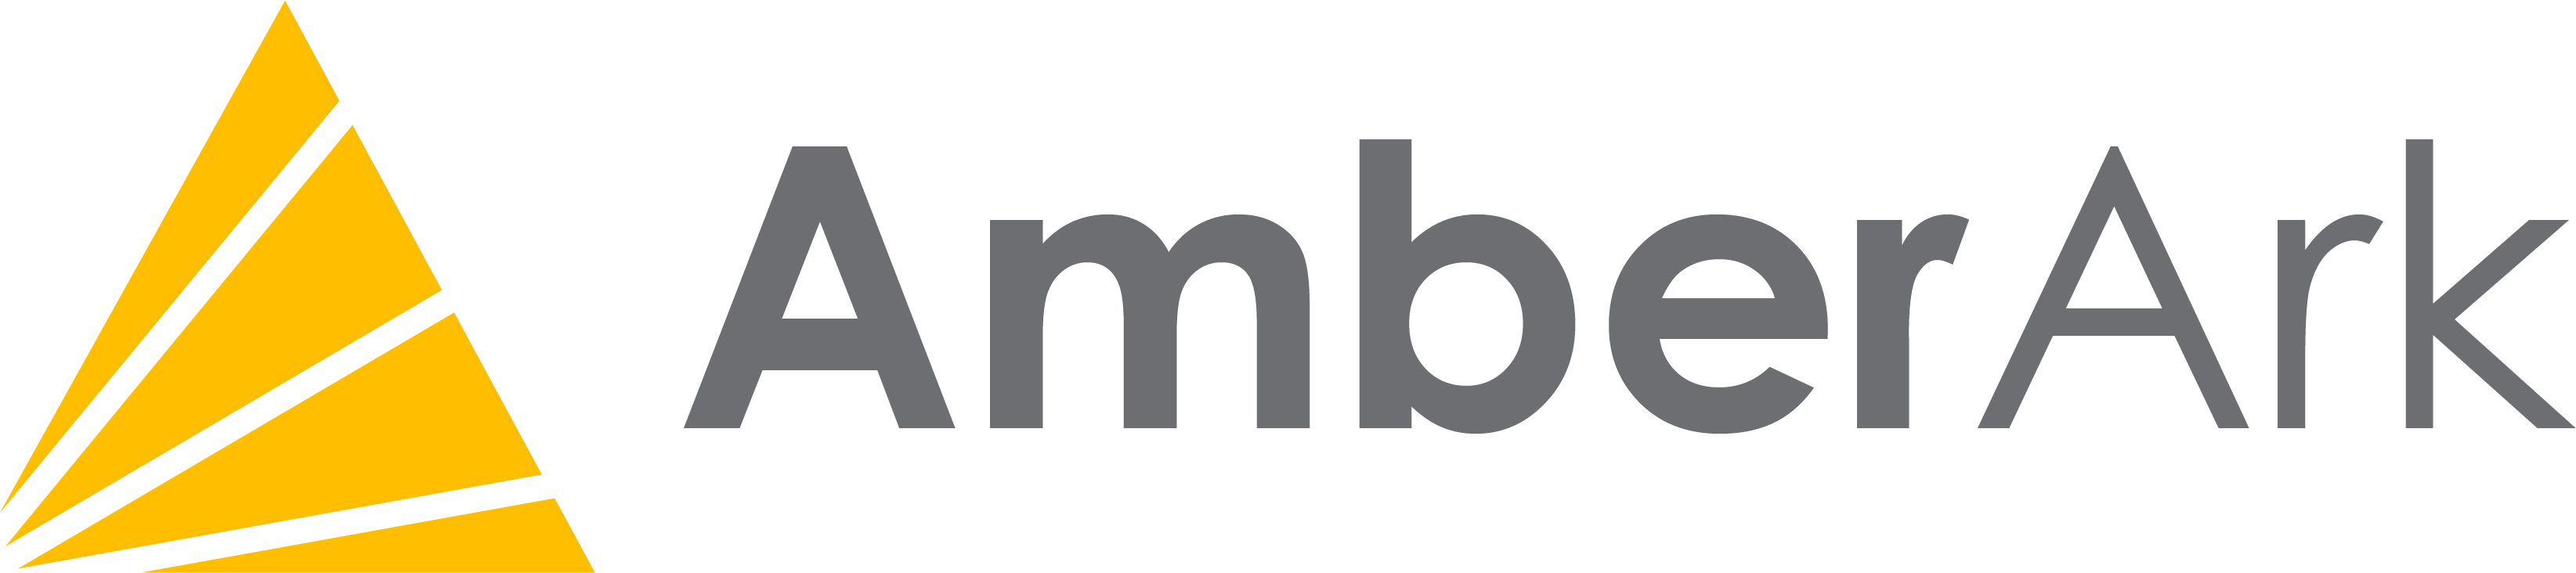 Amber Ark ロゴ